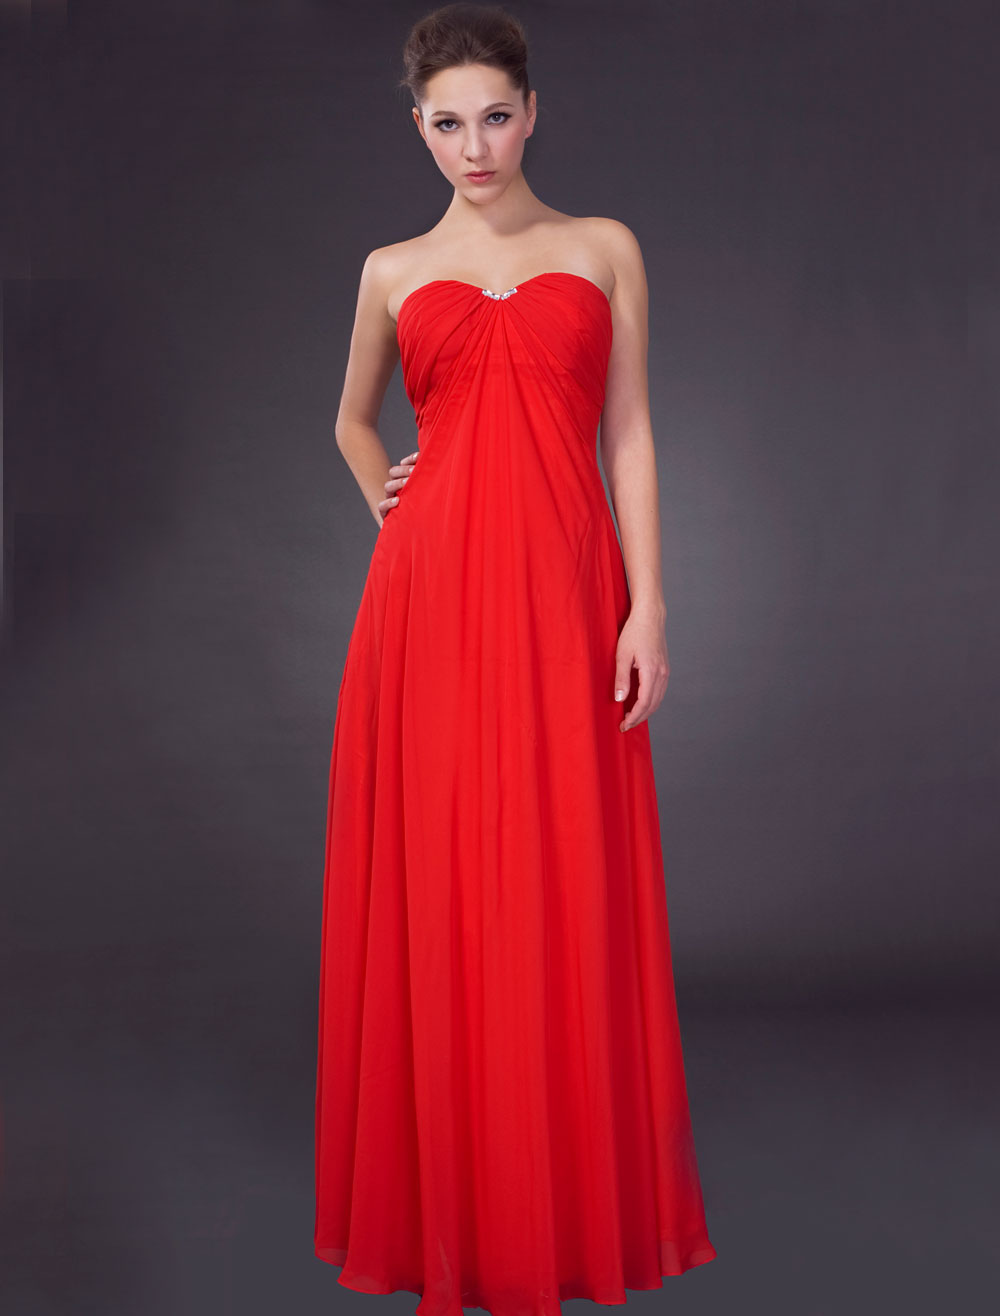 Red Empire Waist Strapless Satin Chiffon Maxi Evening Gown - Milanoo.com